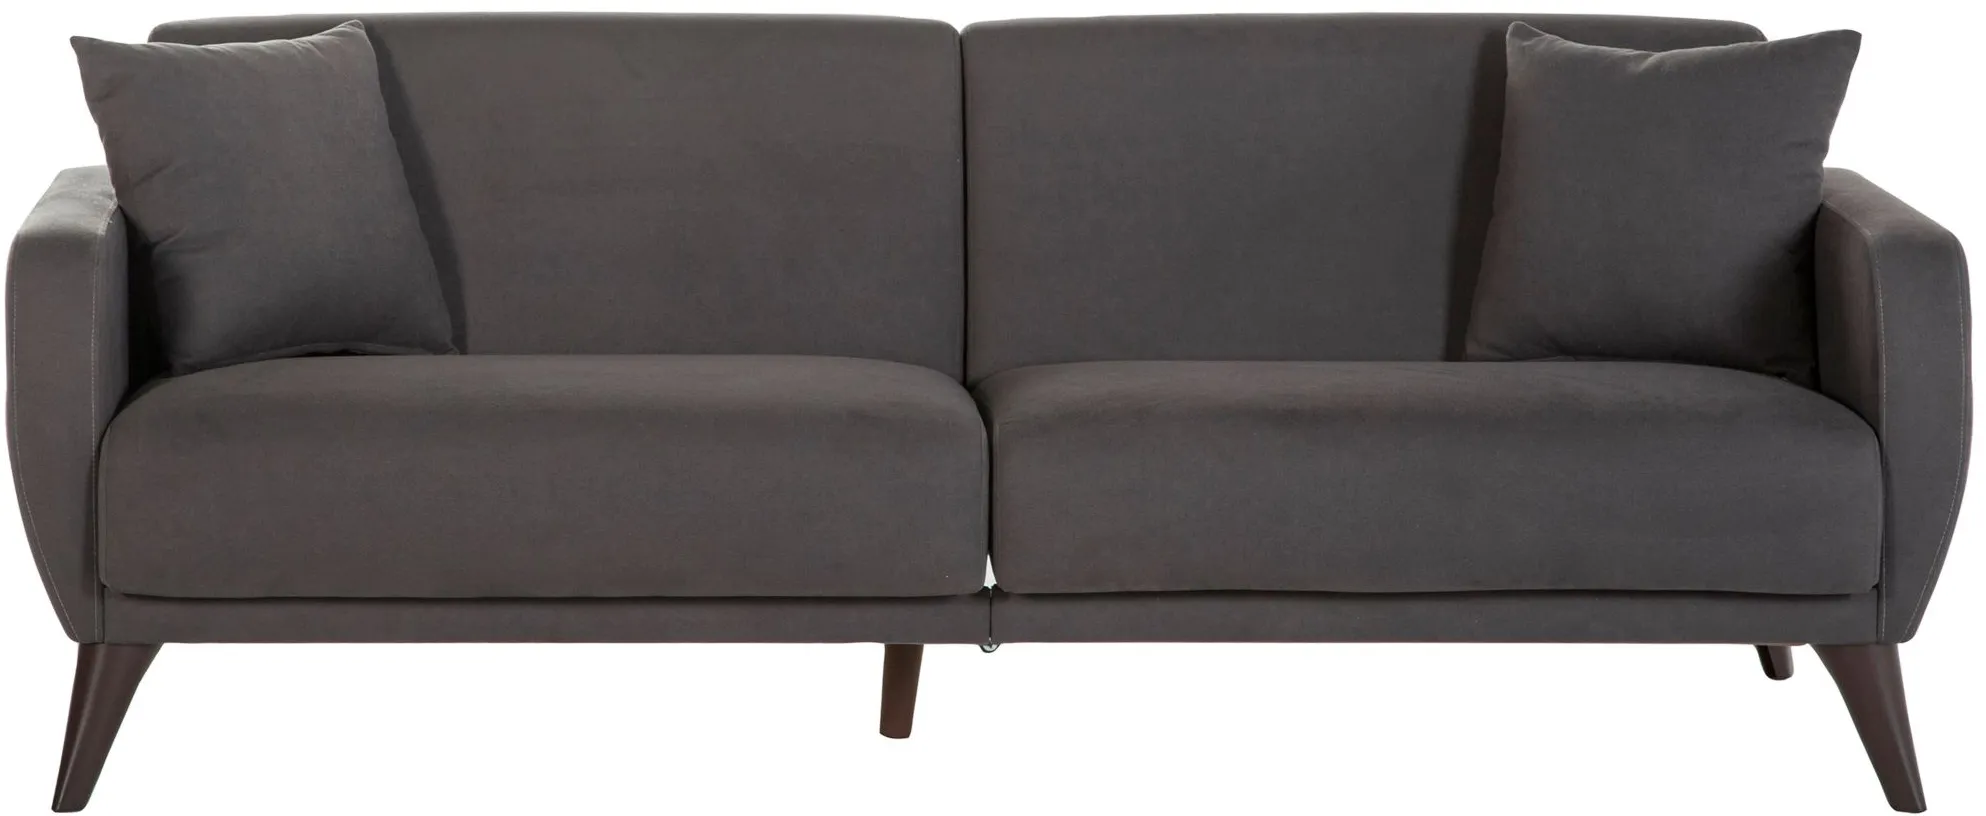 Lugano Sleeper Sofa with Storage in Charcoal by HUDSON GLOBAL MARKETING USA